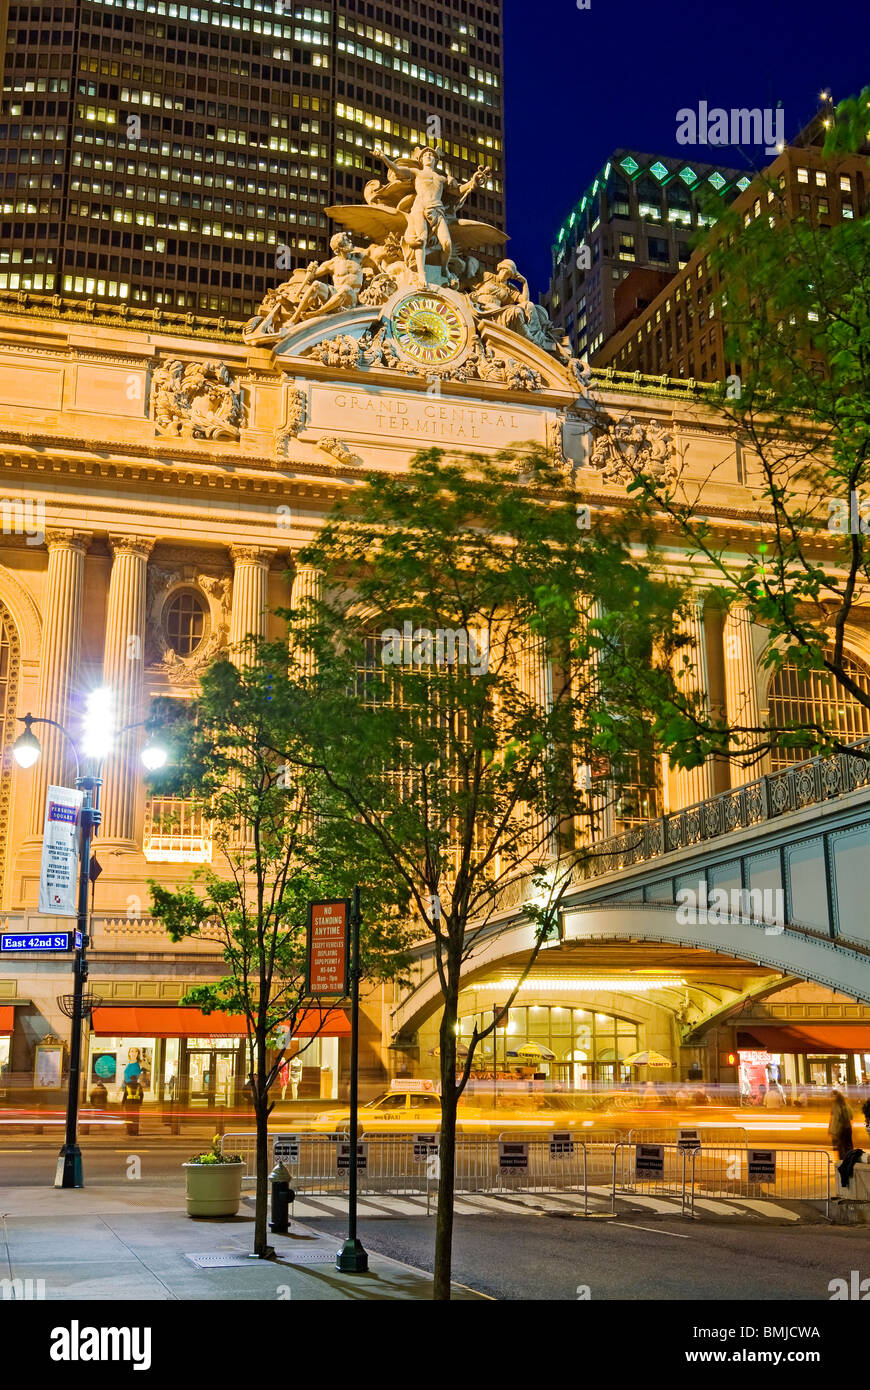 Haupteingang zum Grand Central Terminal auf 42nd Street, New York City. Stockfoto